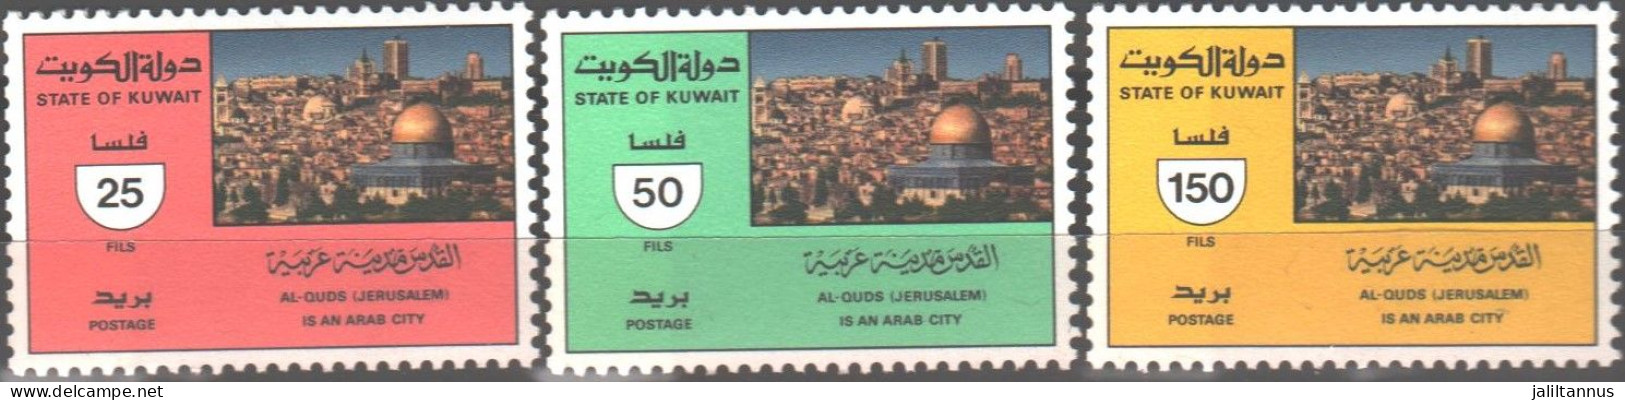 Kuwait (PALESTINE) AL-QUDS (JERUSALEM) IS AN ARAB CITY 1987 - Kuwait